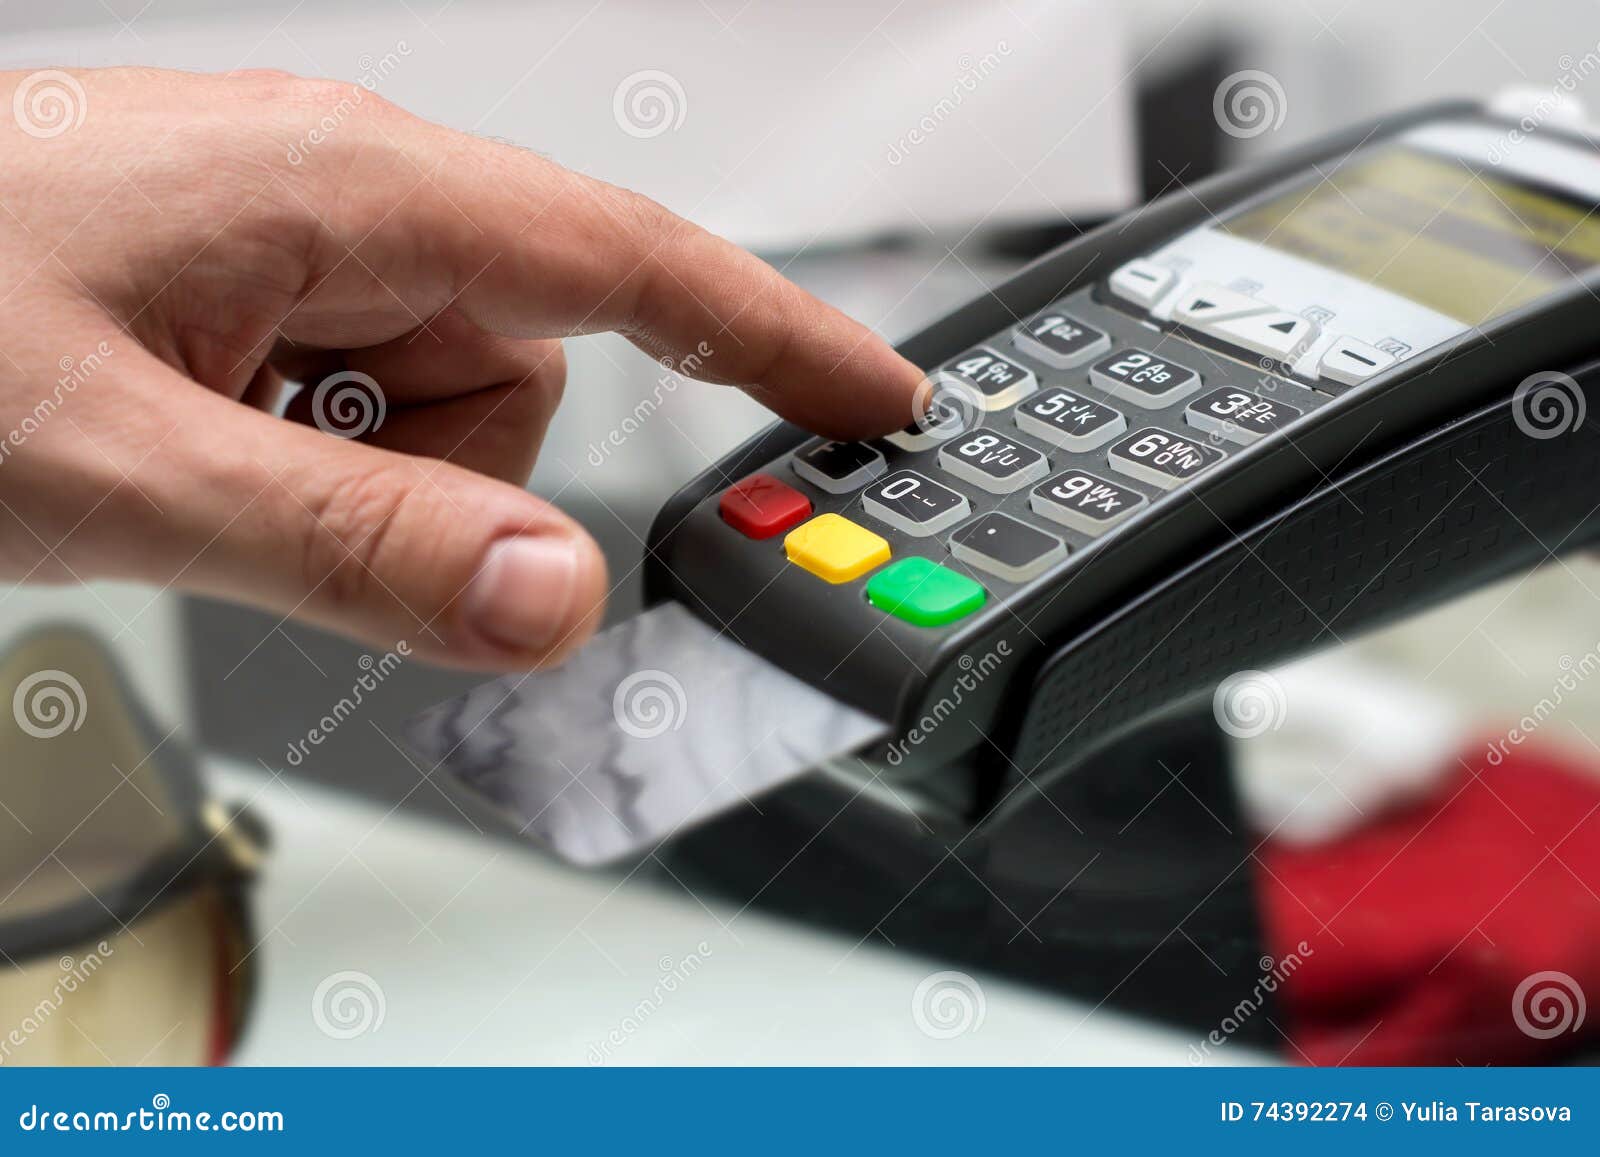 credit or debit card password payment. customer hand is entering